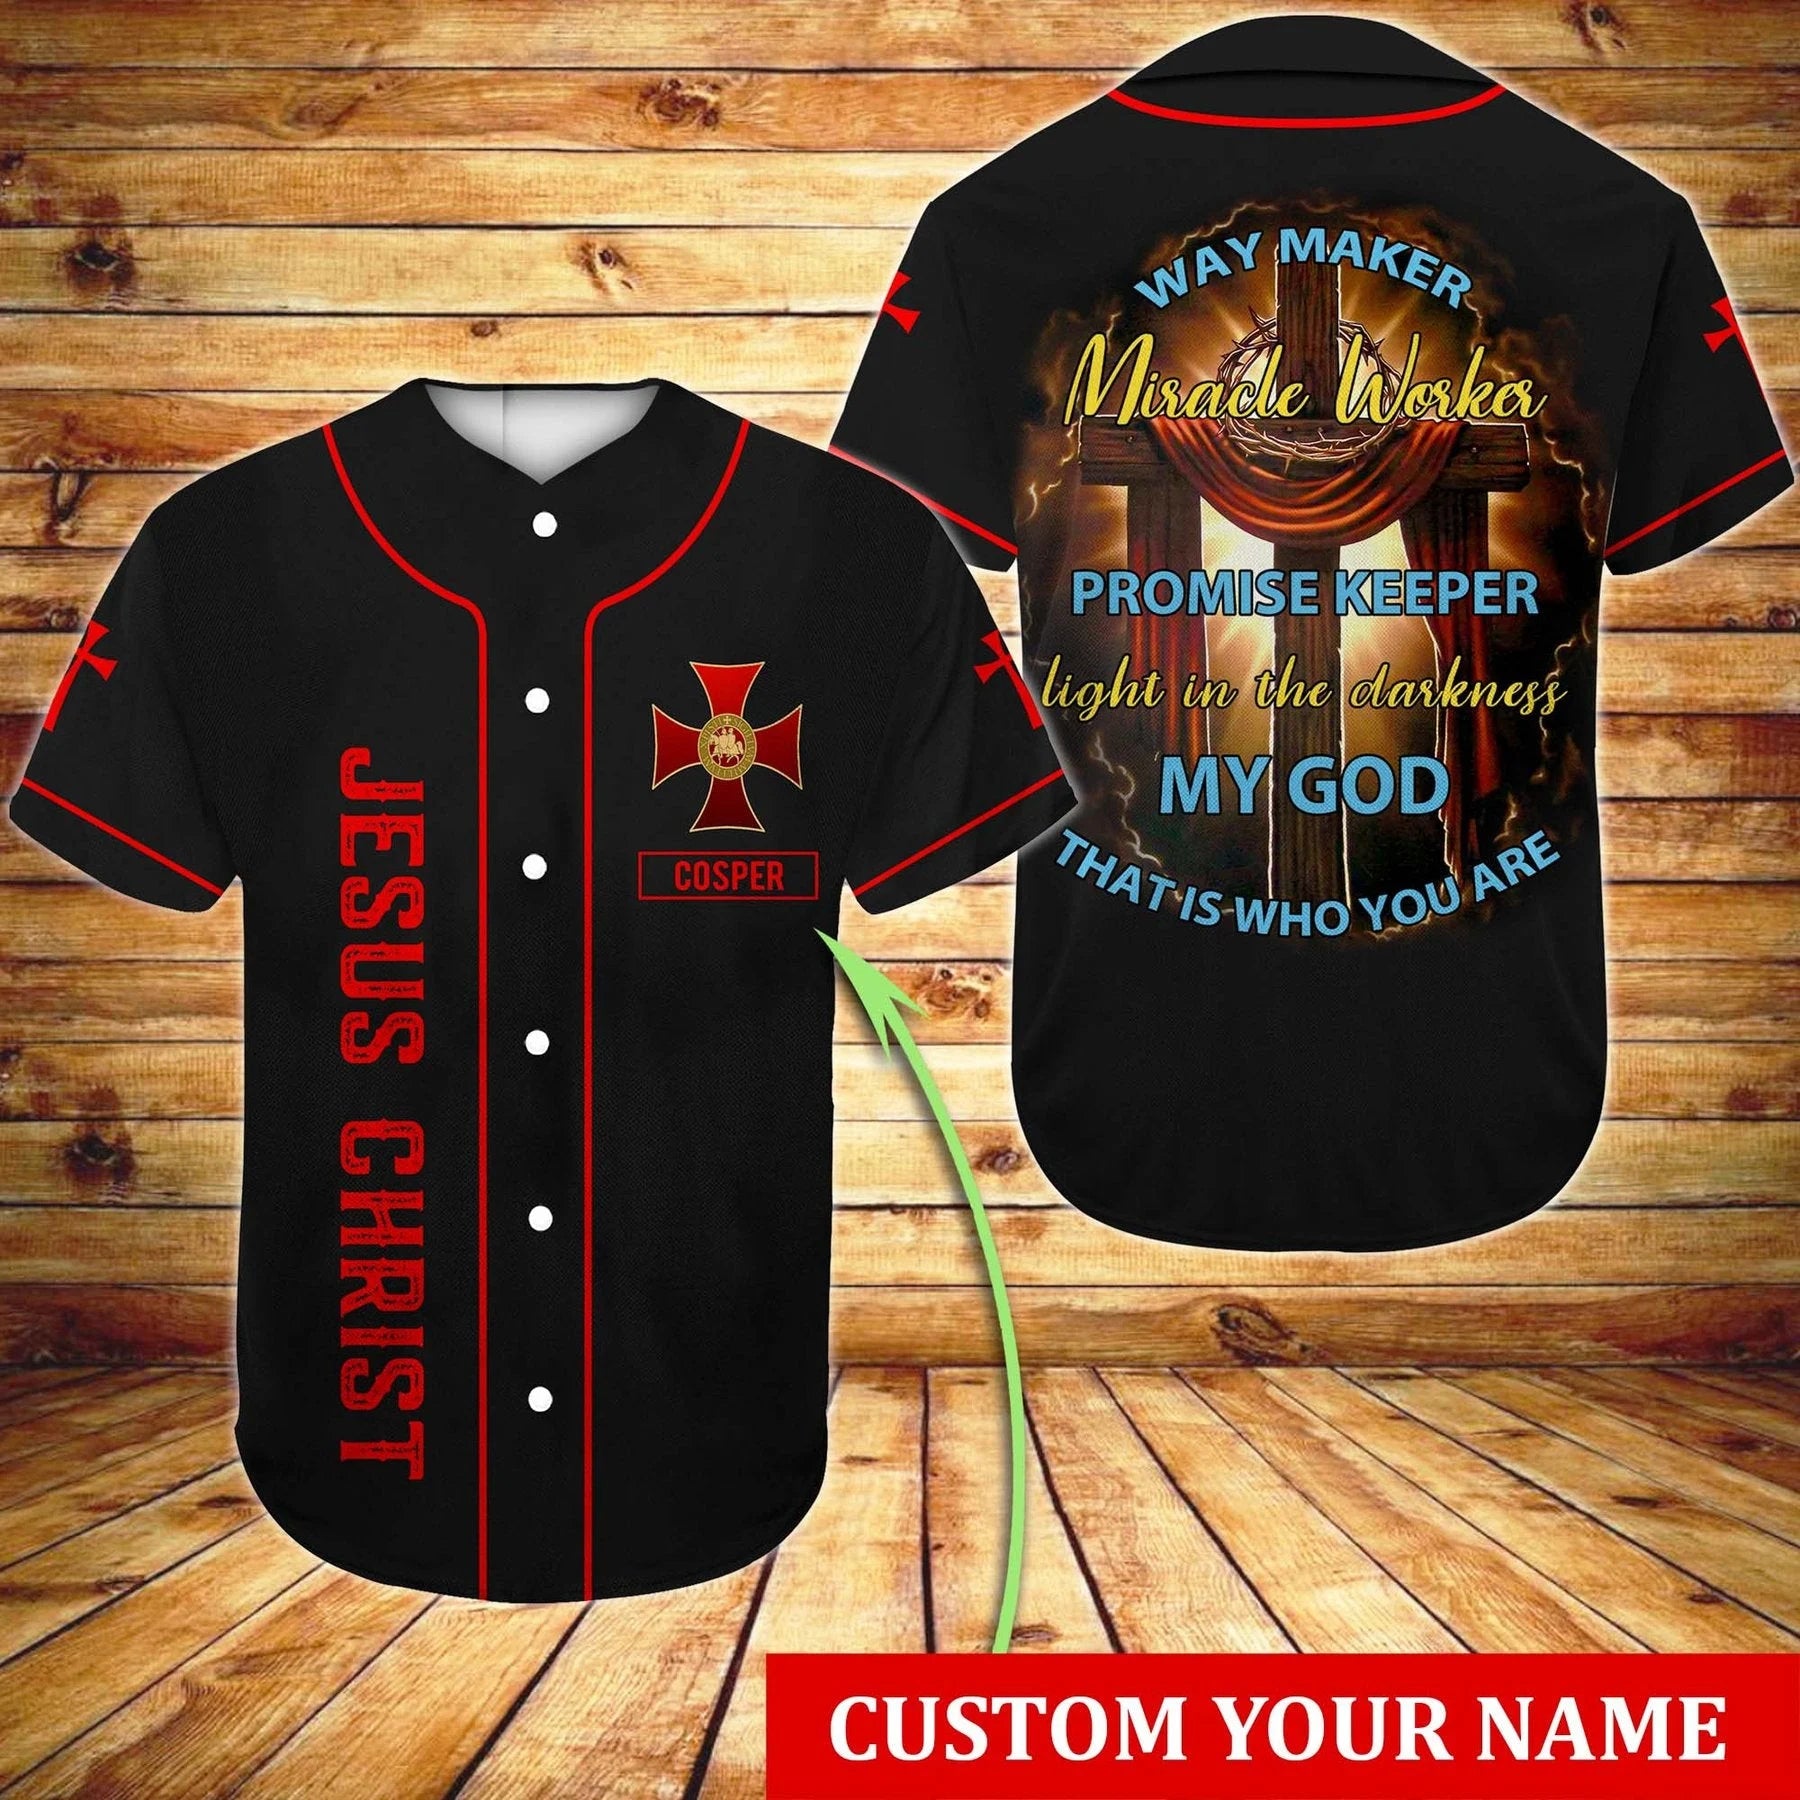 Personalized Jesus Baseball Jersey - Cross Baseball Jersey - Gift For Christians - Way Maker Miracle Worker Promise Keeper Custom Baseball Jersey